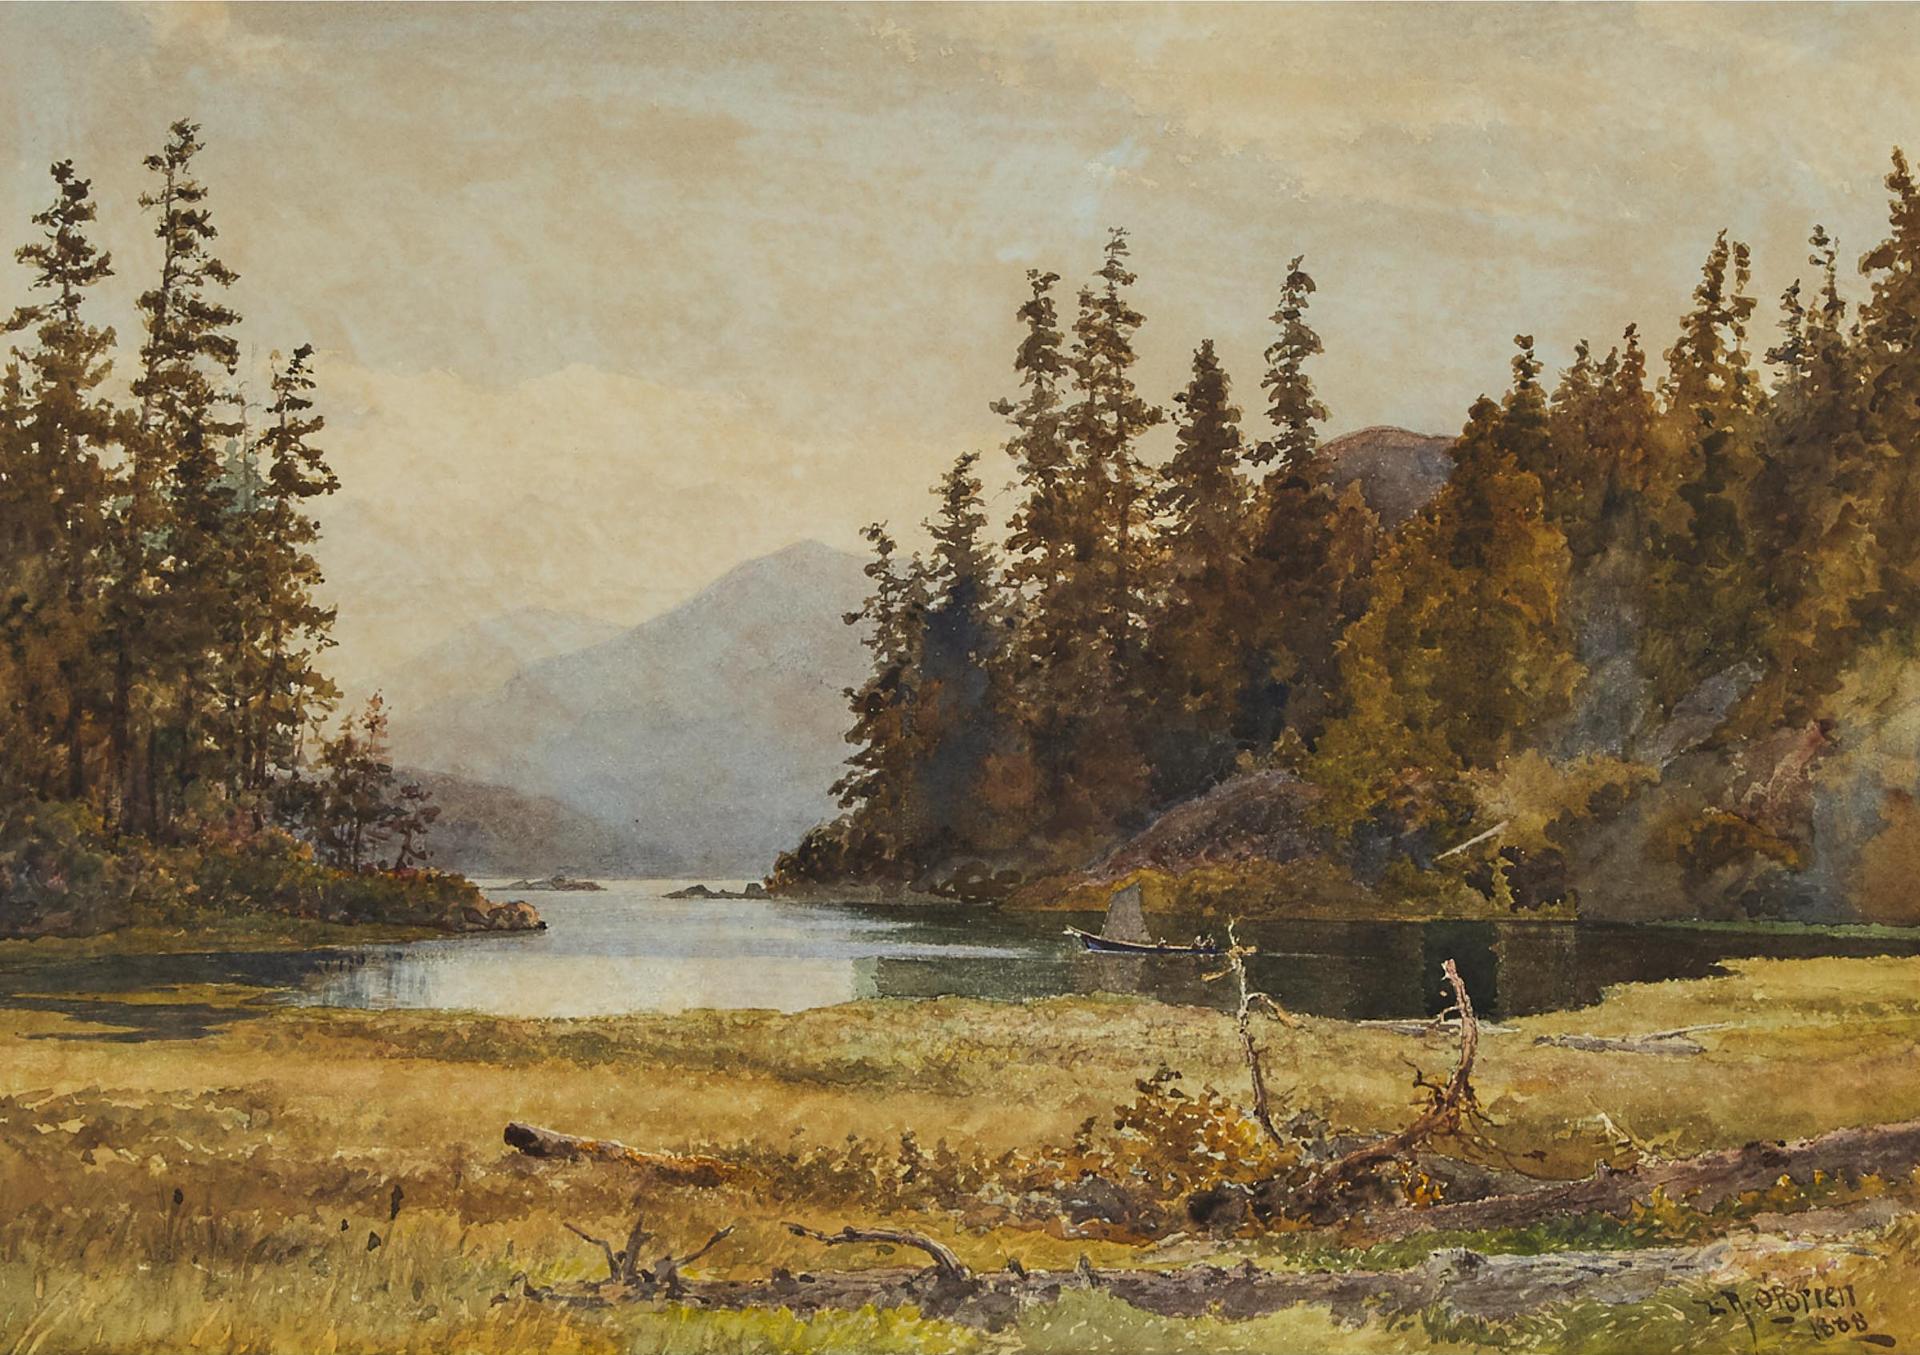 Lucius Richard O'Brien (1832-1899) - Boating On The Mountain Lake, 1888